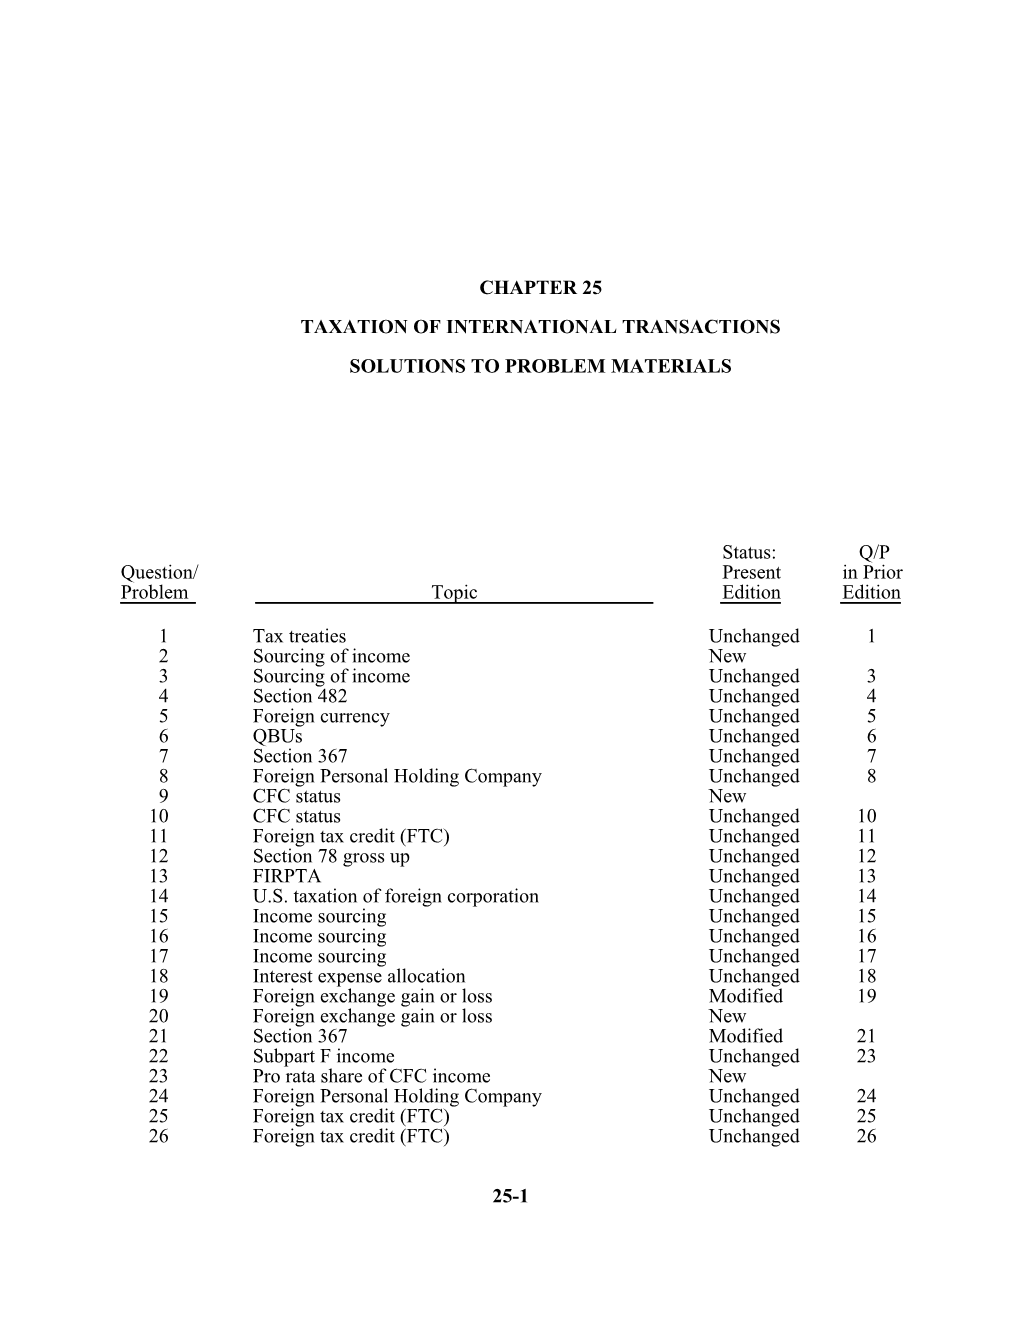 Taxation of International Transactions25-1